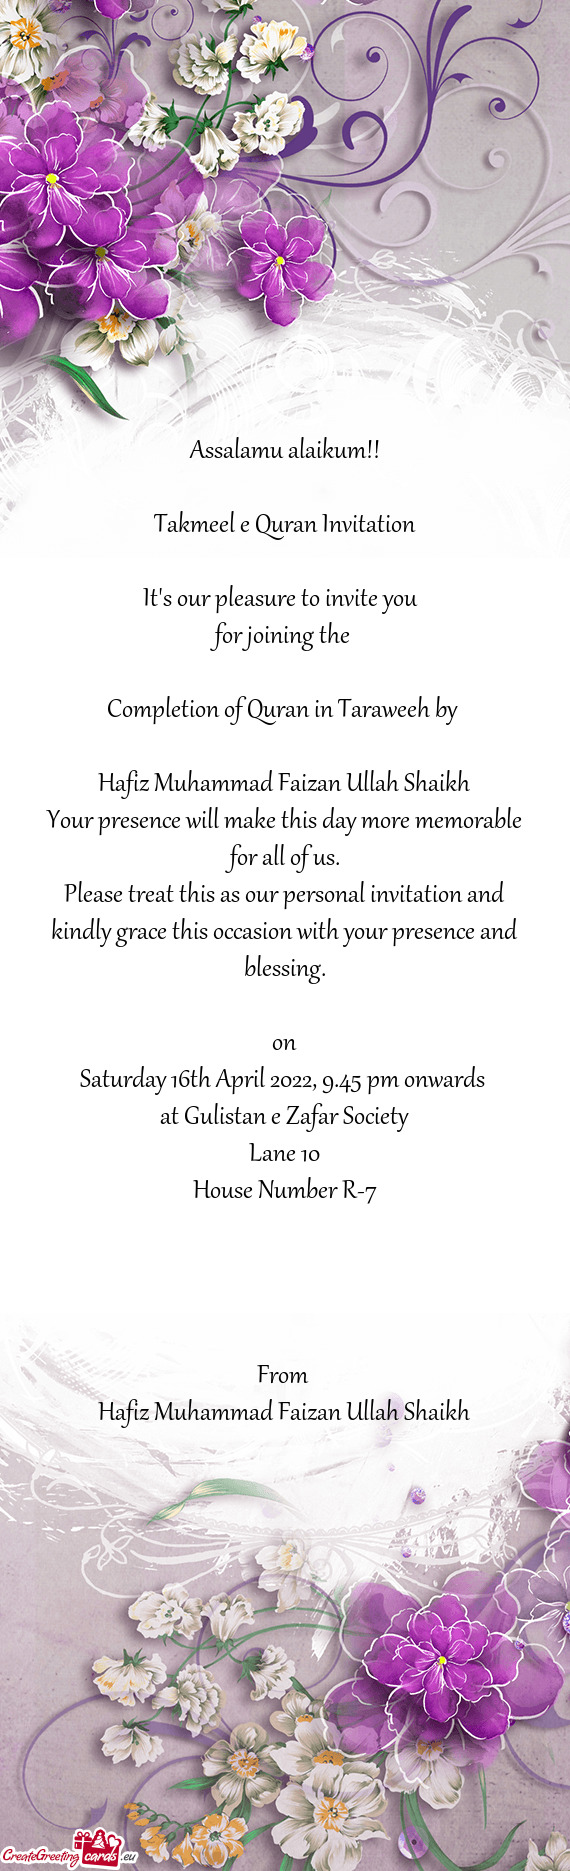 Takmeel e Quran Invitation